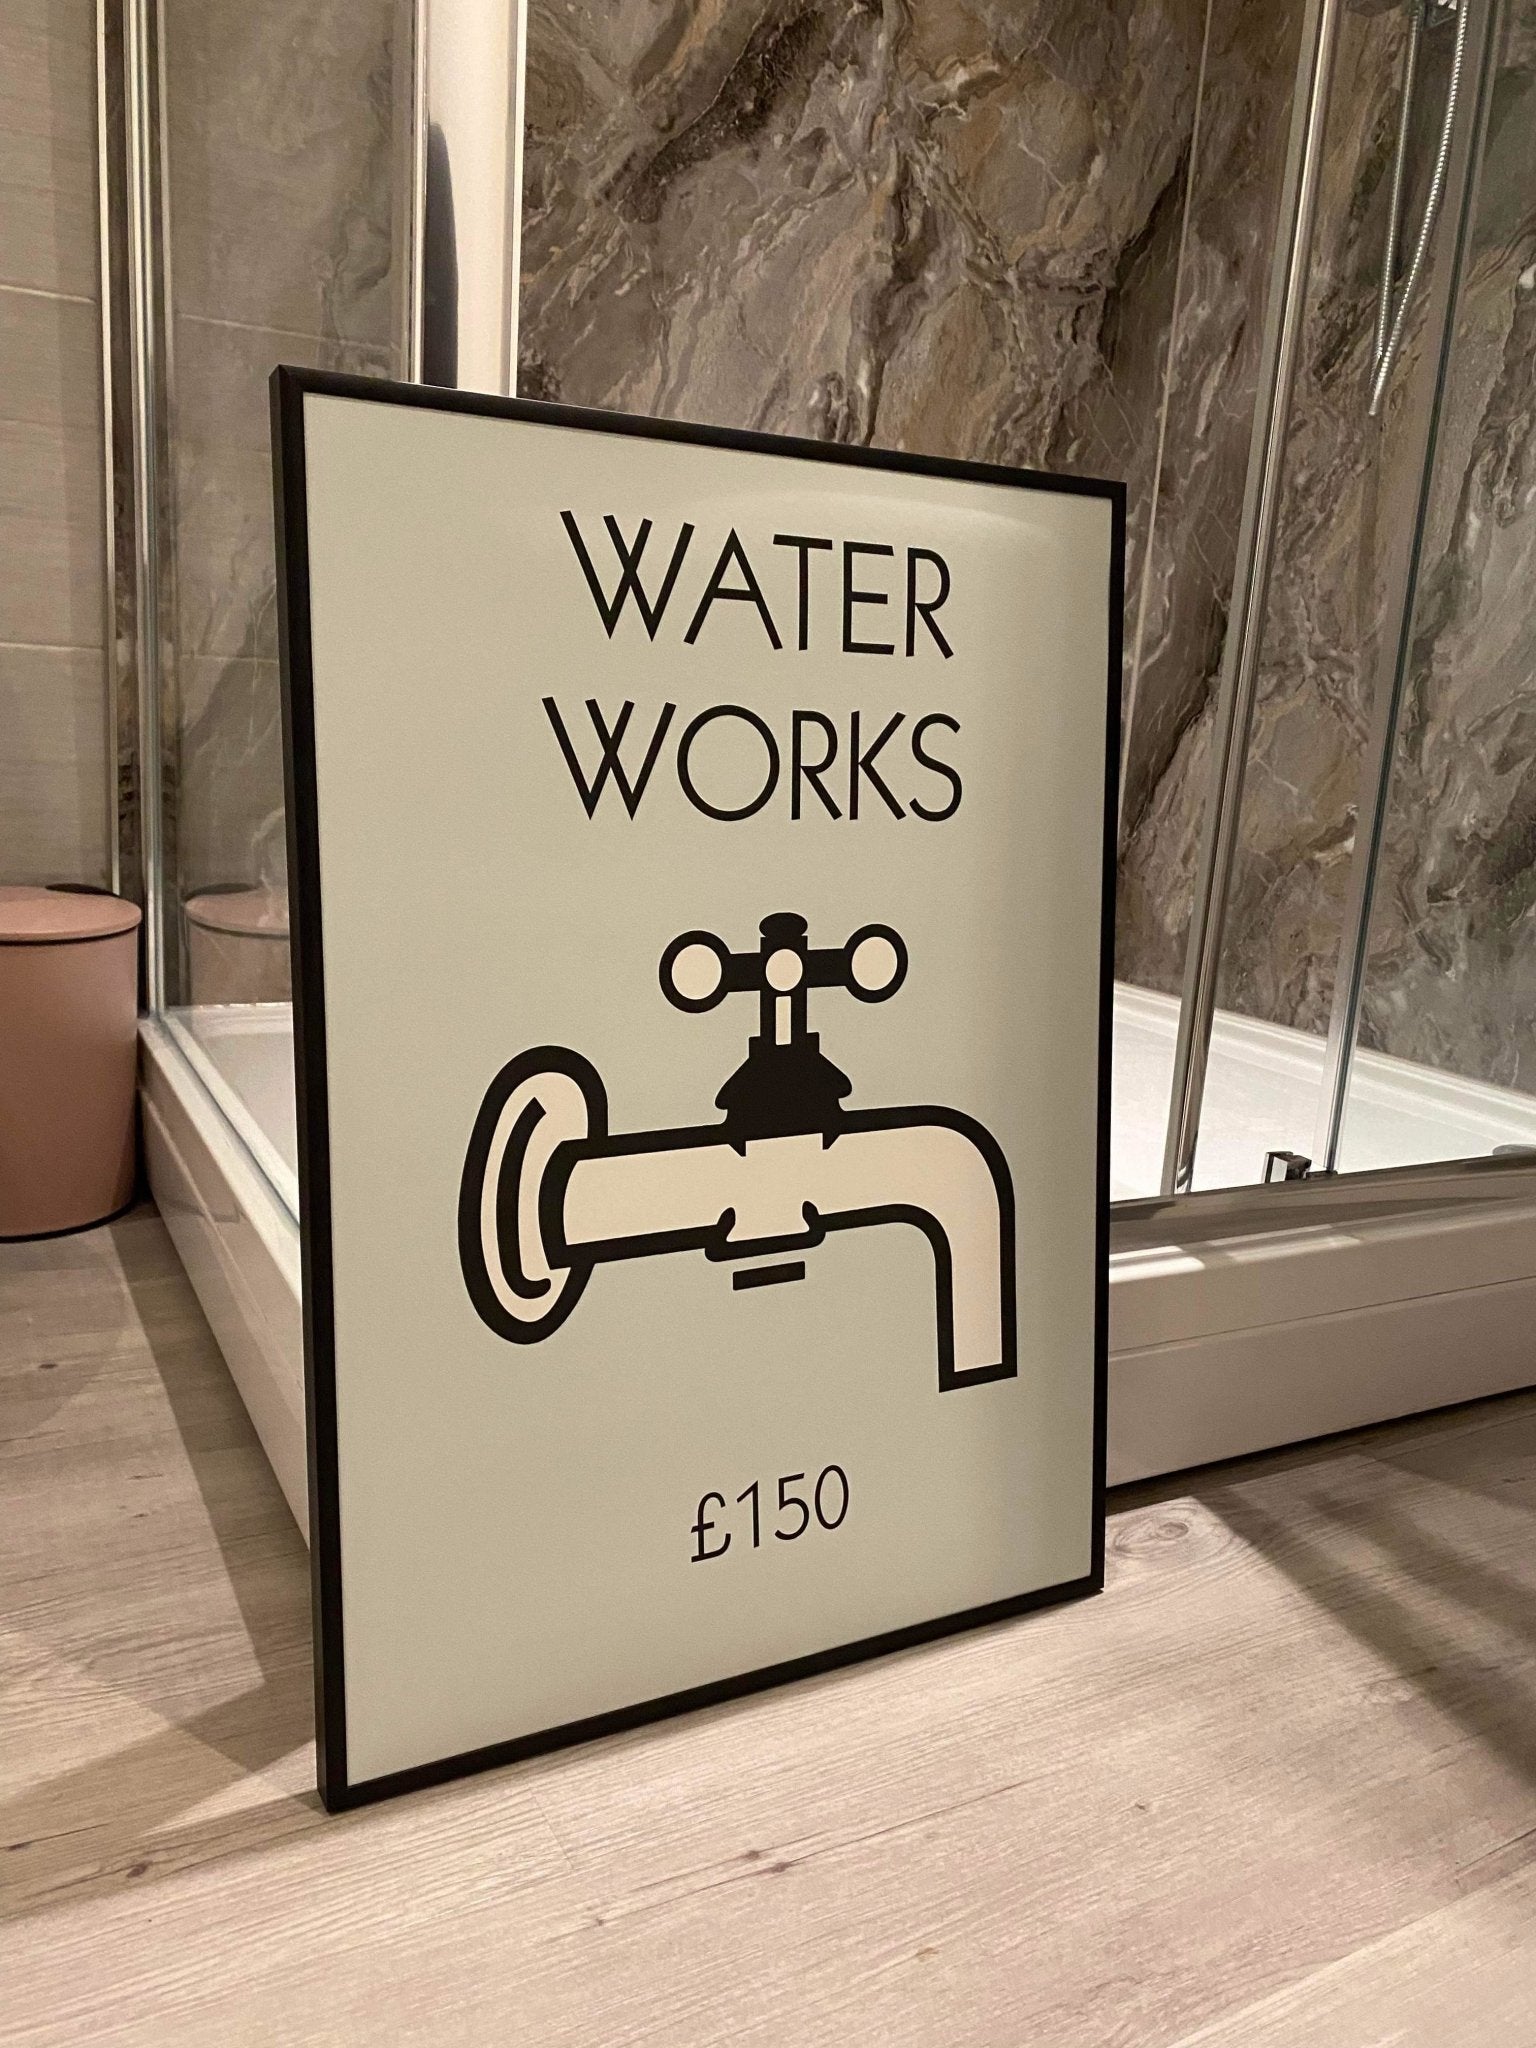 waterworks monopoly print